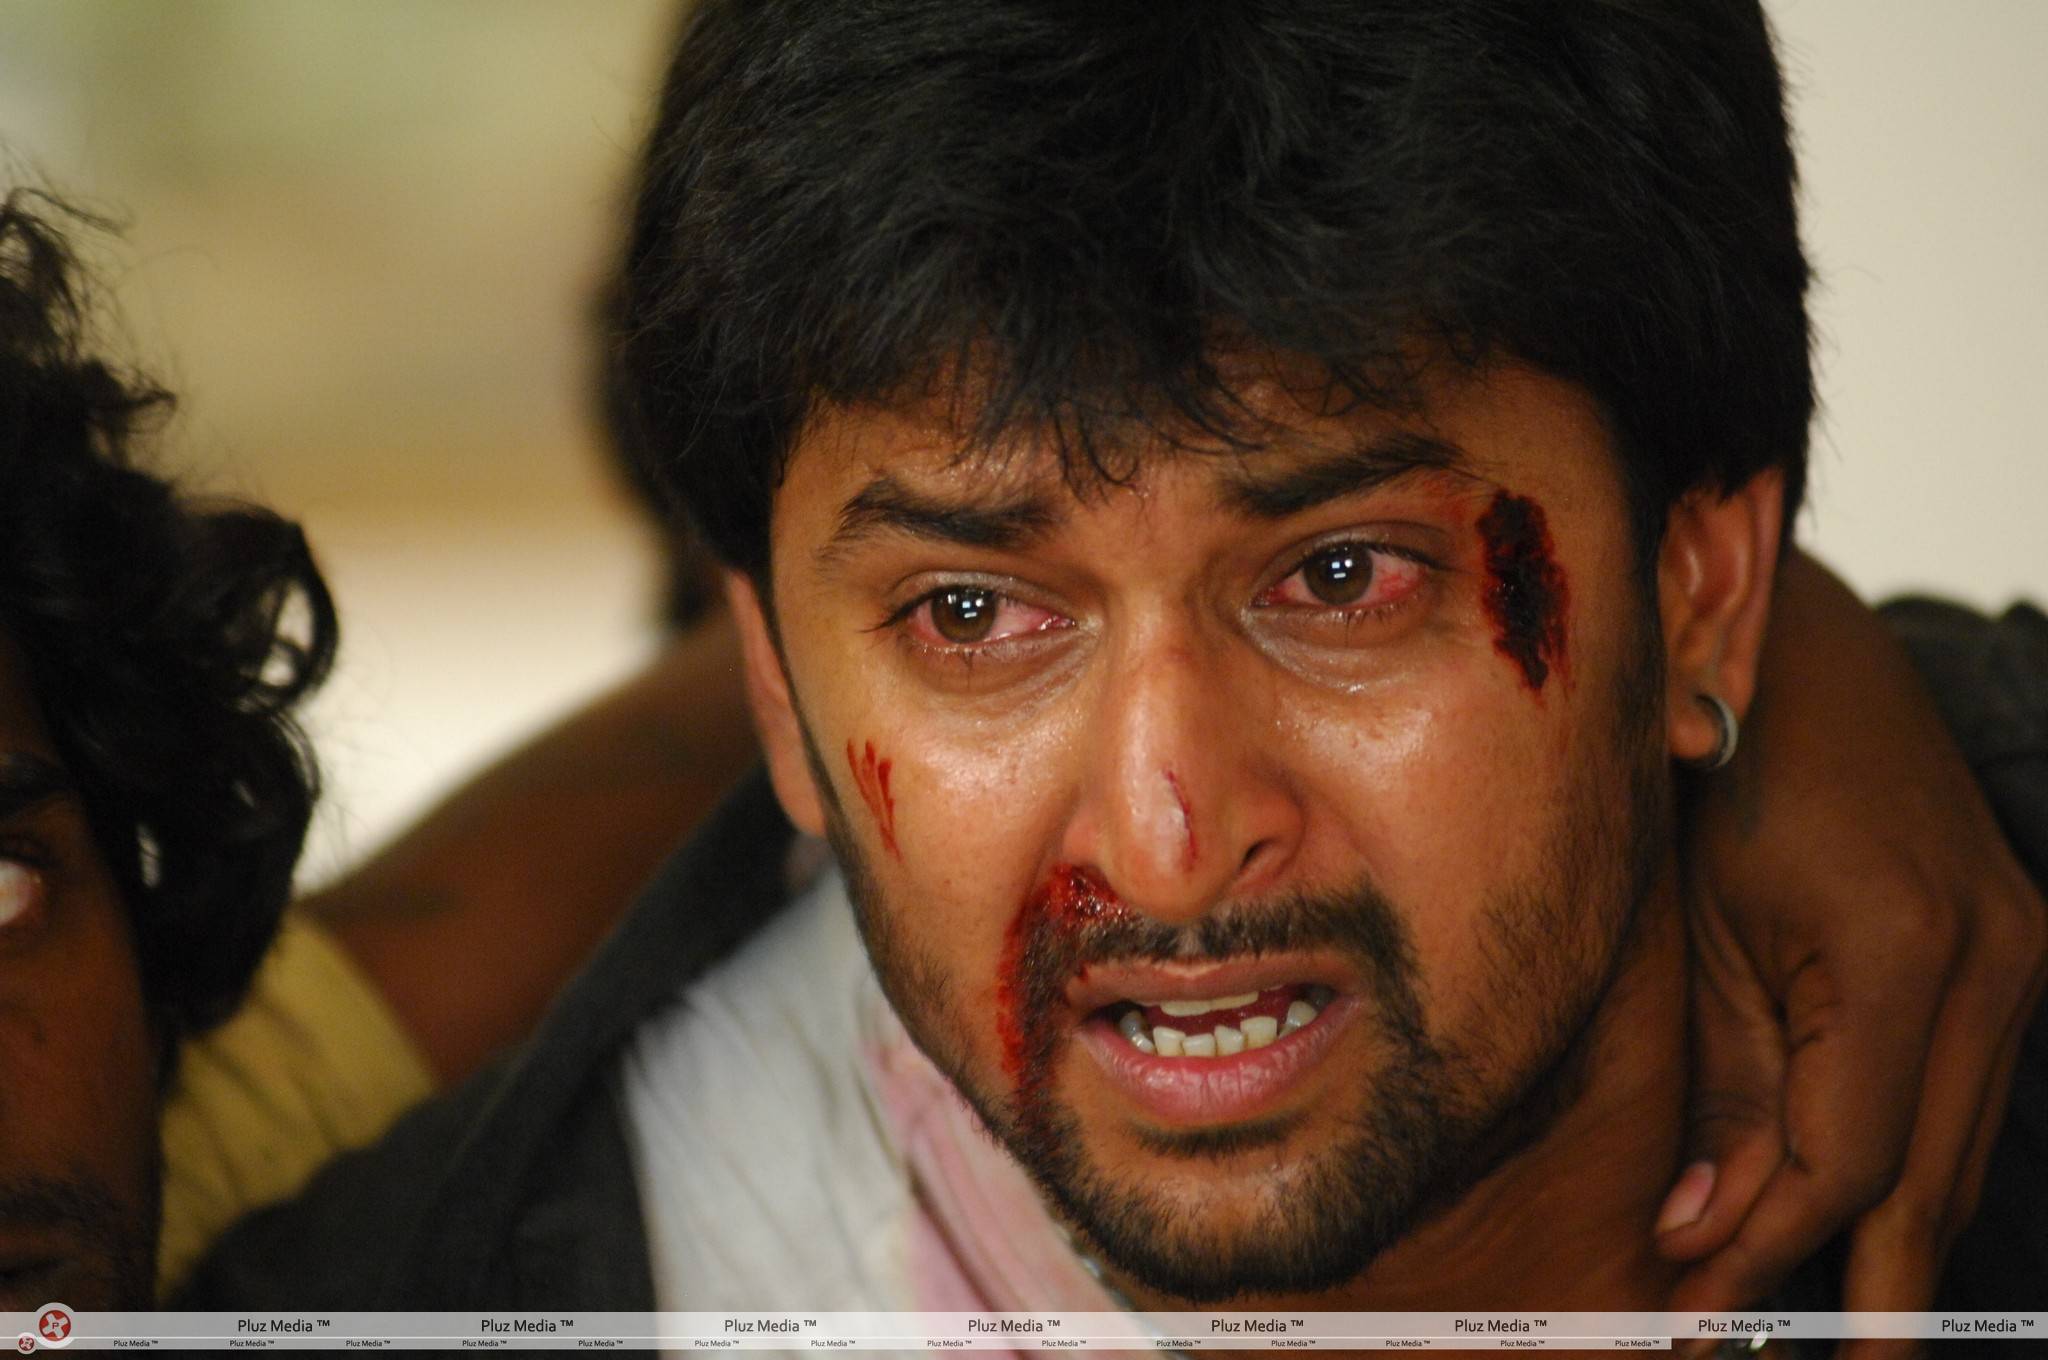 Nani - Paisa Telugu Movie Stills | Picture 454627